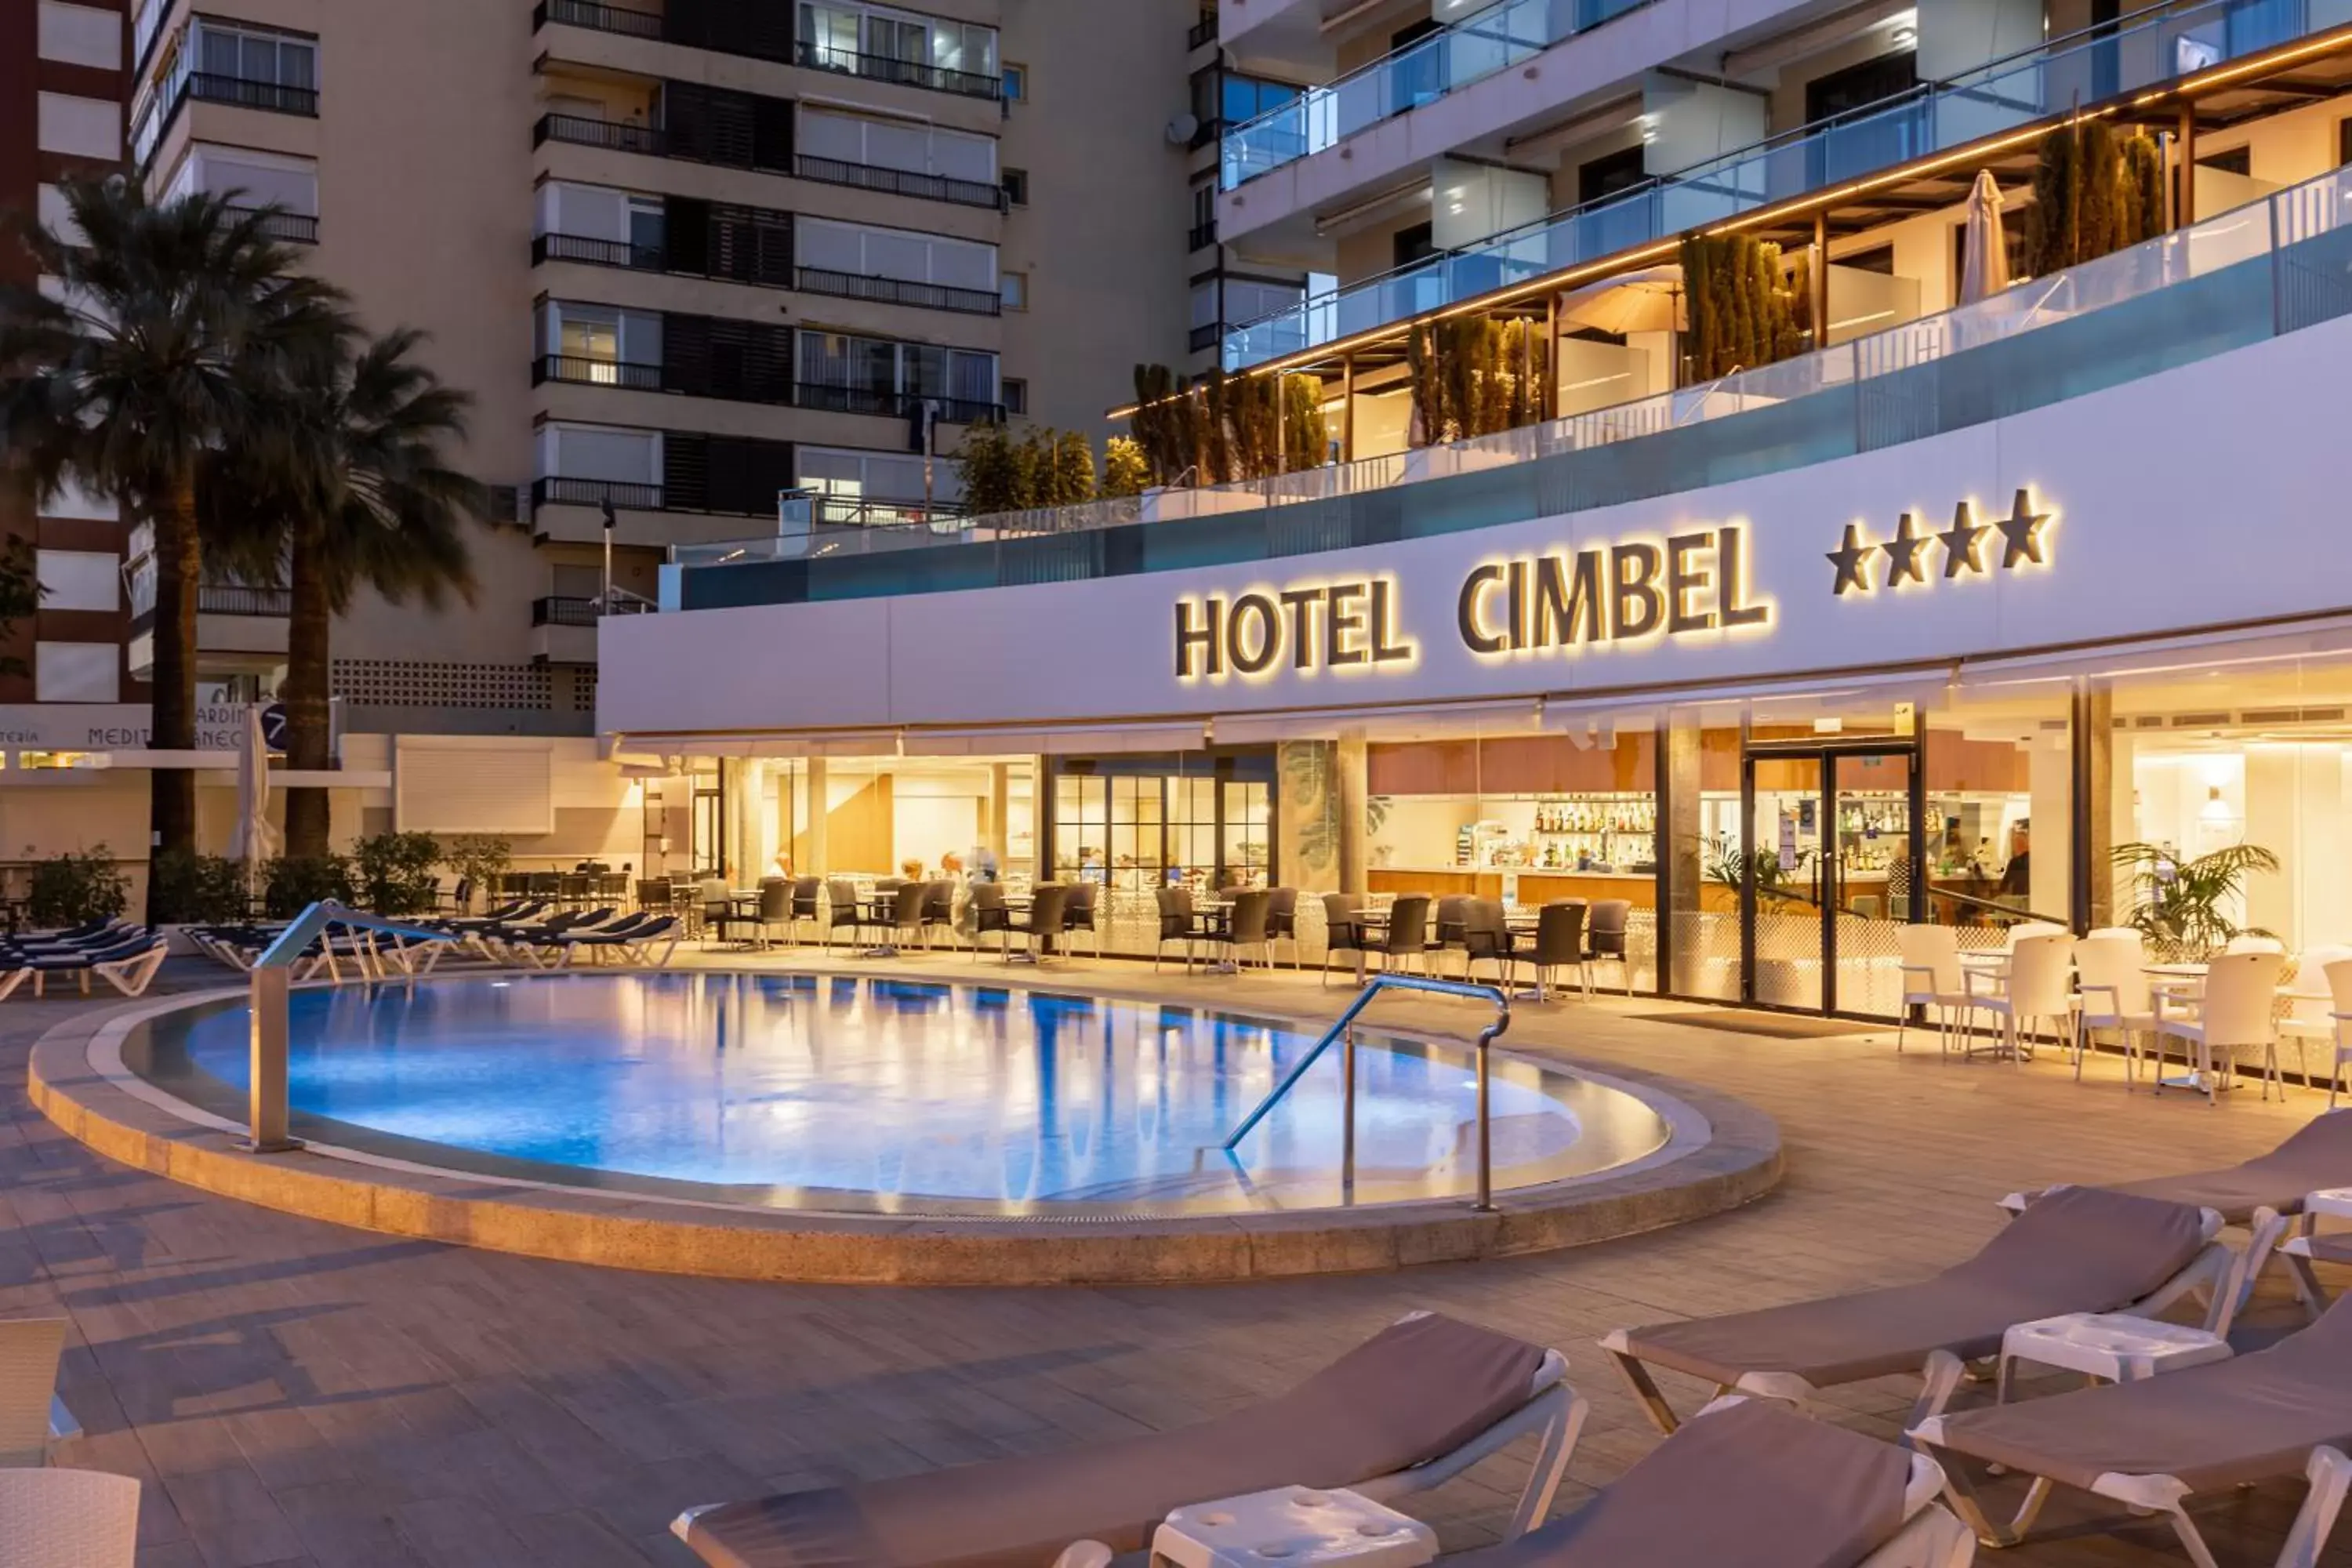 Swimming Pool in Hotel Cimbel